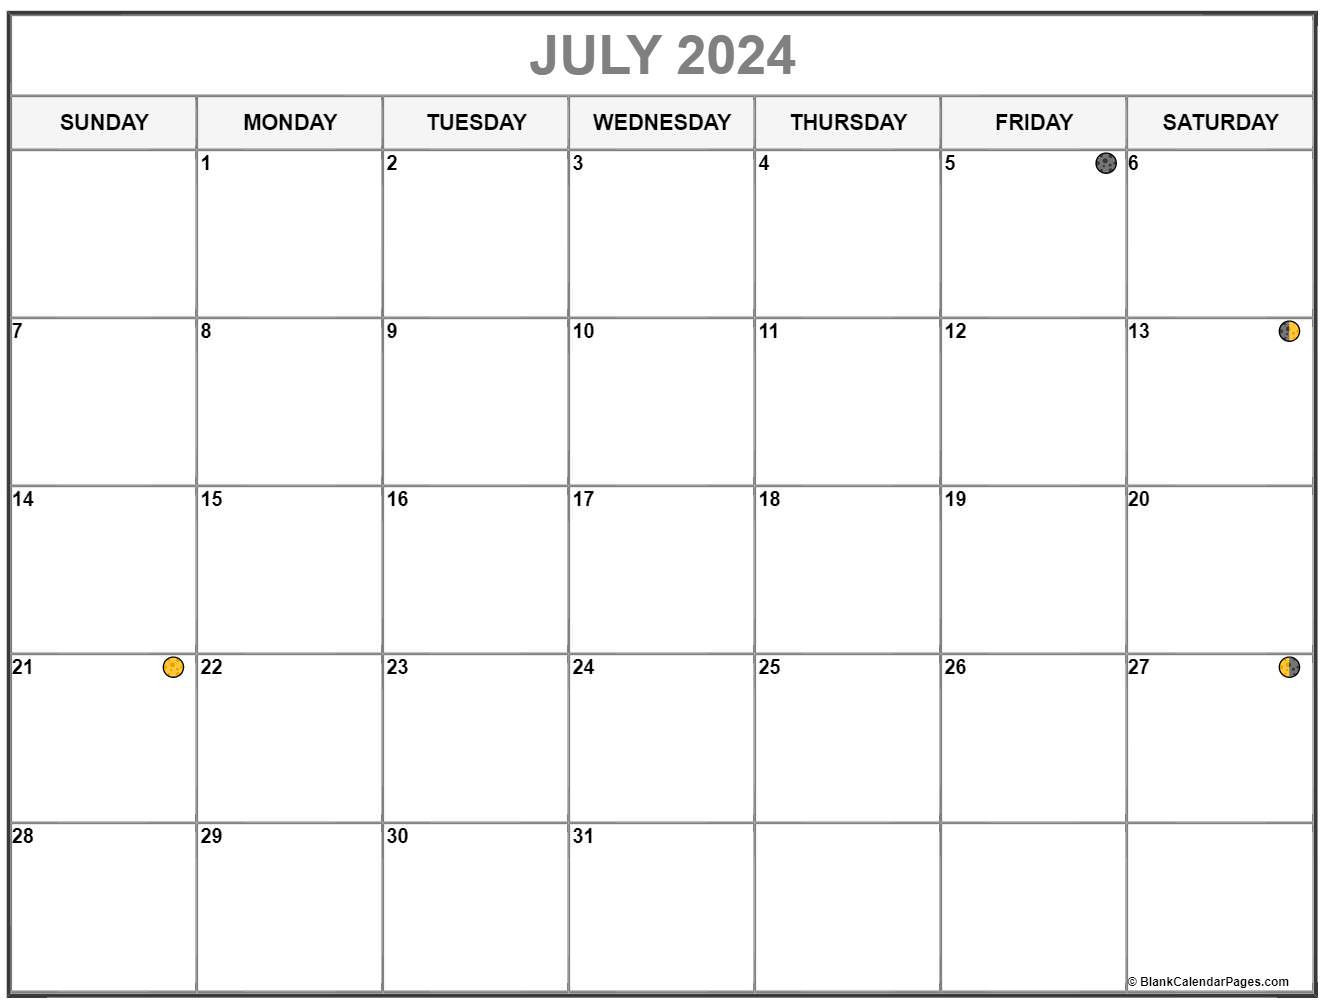 July 2024 Lunar Calendar | Moon Phase Calendar in July 1 Lunar Calendar 2024